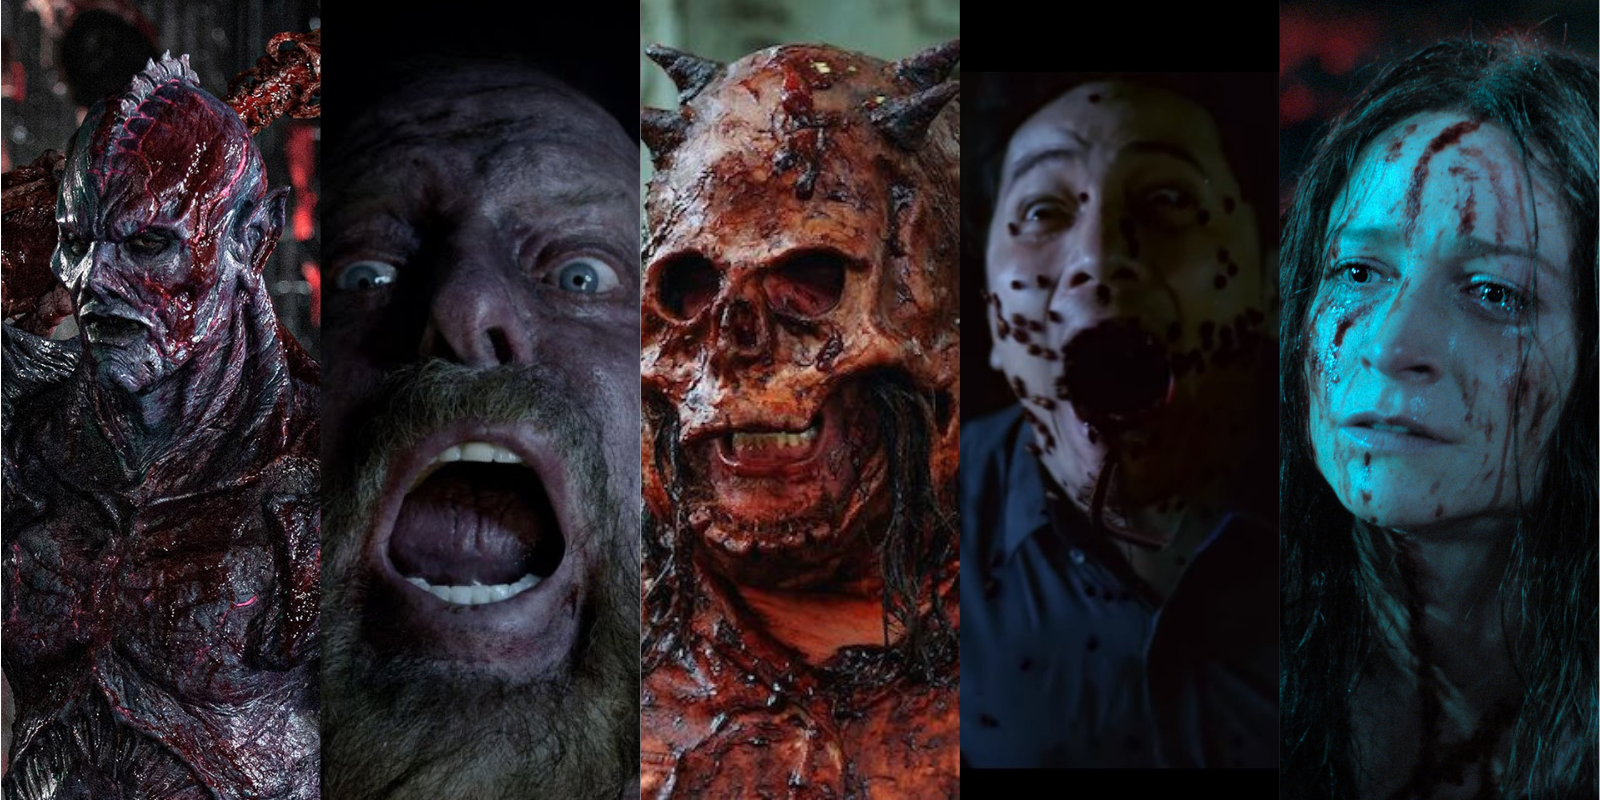  Zombie Mania Massaker - 3 Filme Edition : Movies & TV